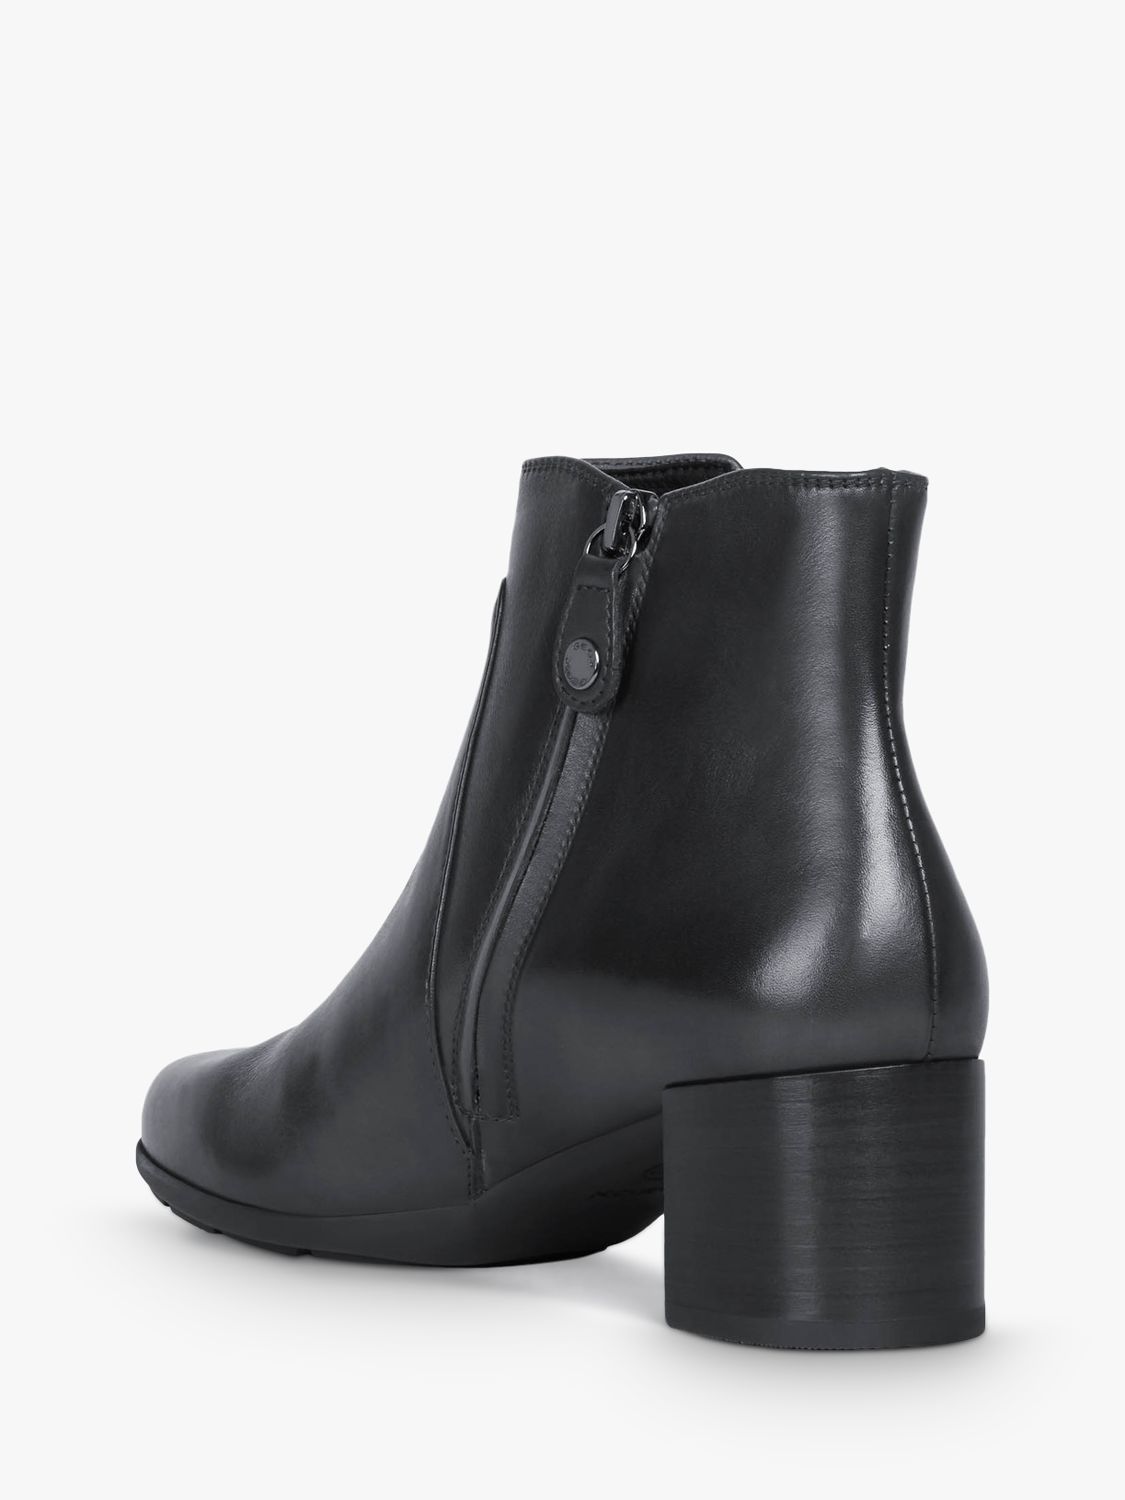 Molde colección sexual Geox Women's Annya Leather Block Heel Ankle Boots, Black